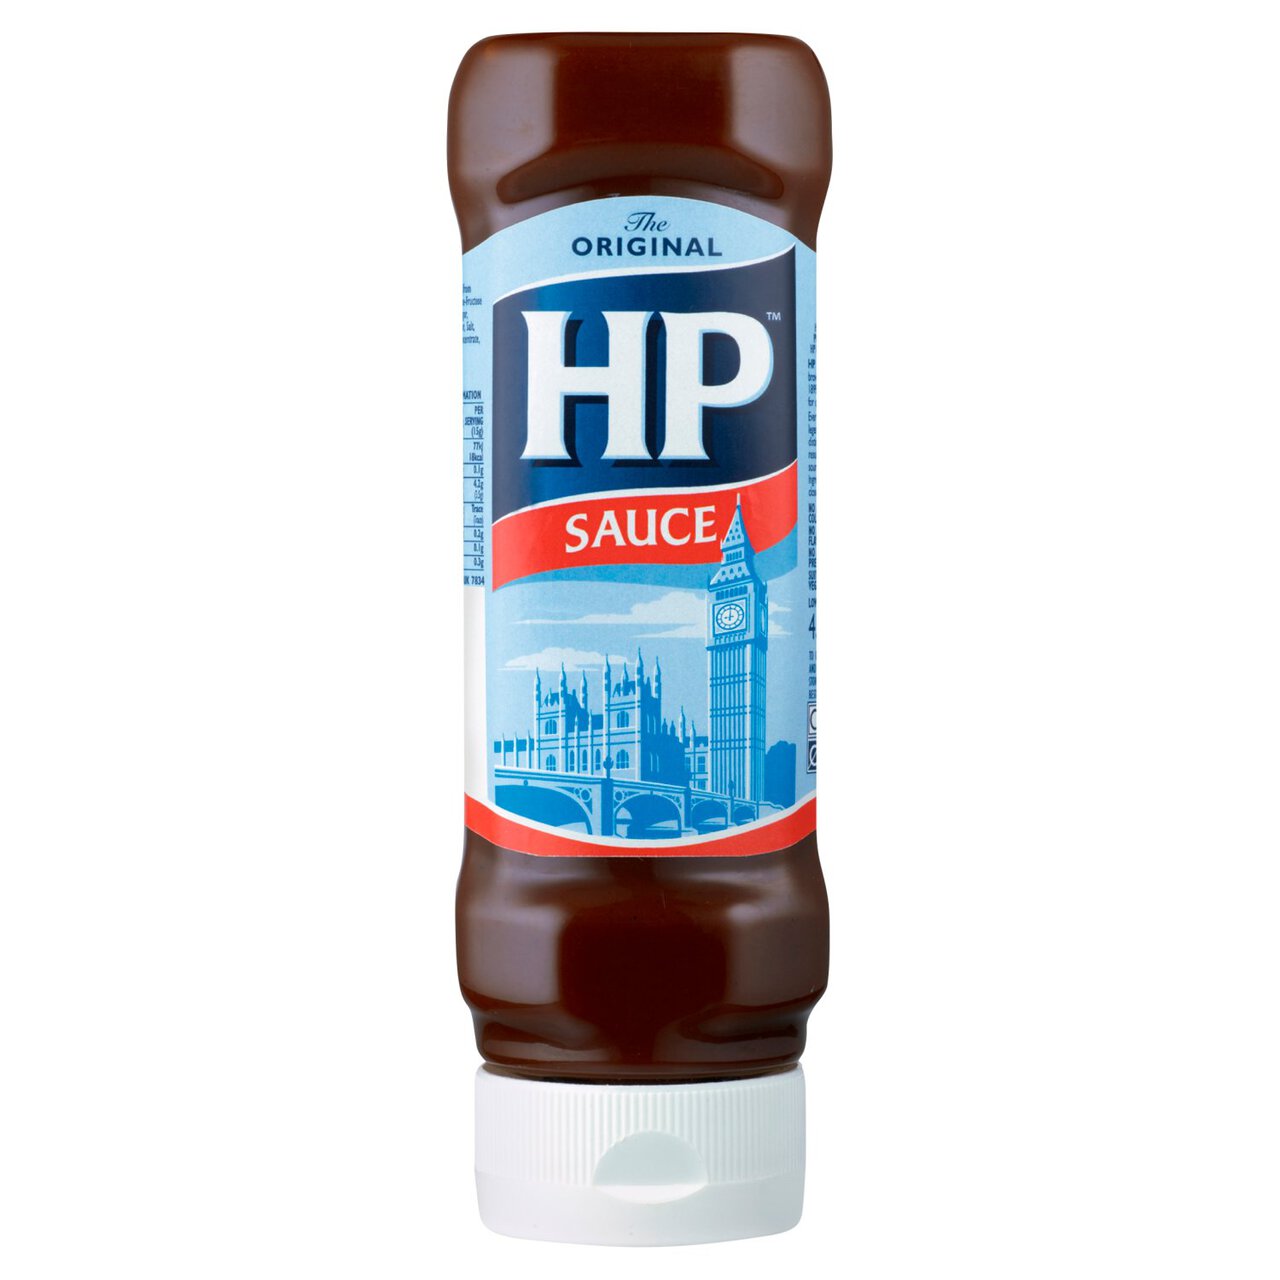 HP Sauce Topdown 450g